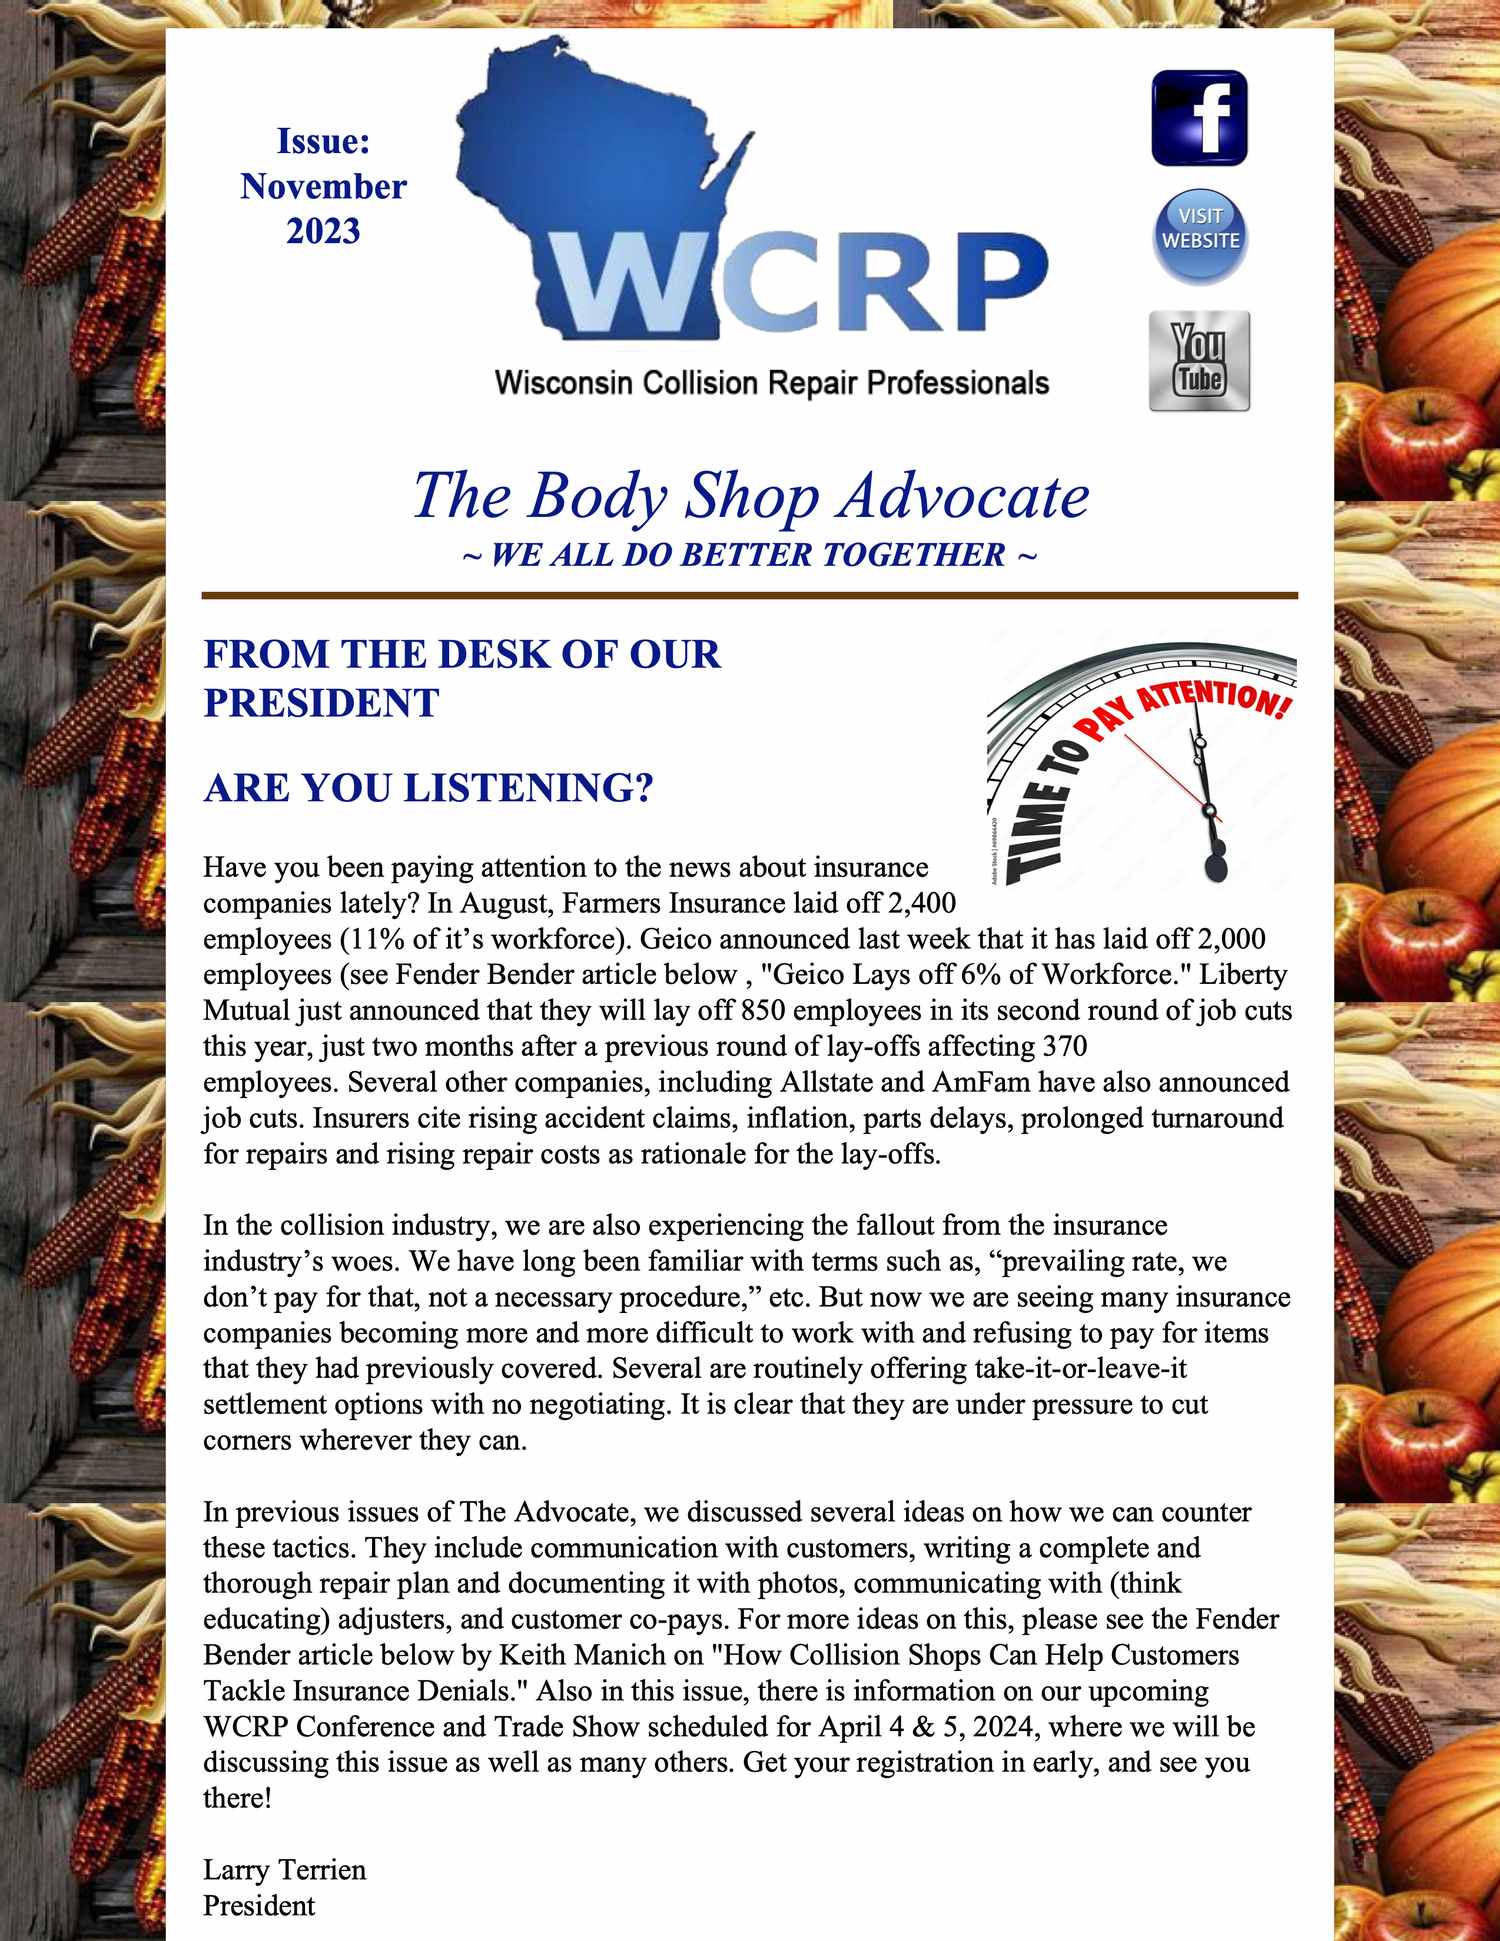 The Body Shop Advocate, WCRP, Wisconsin Auto News